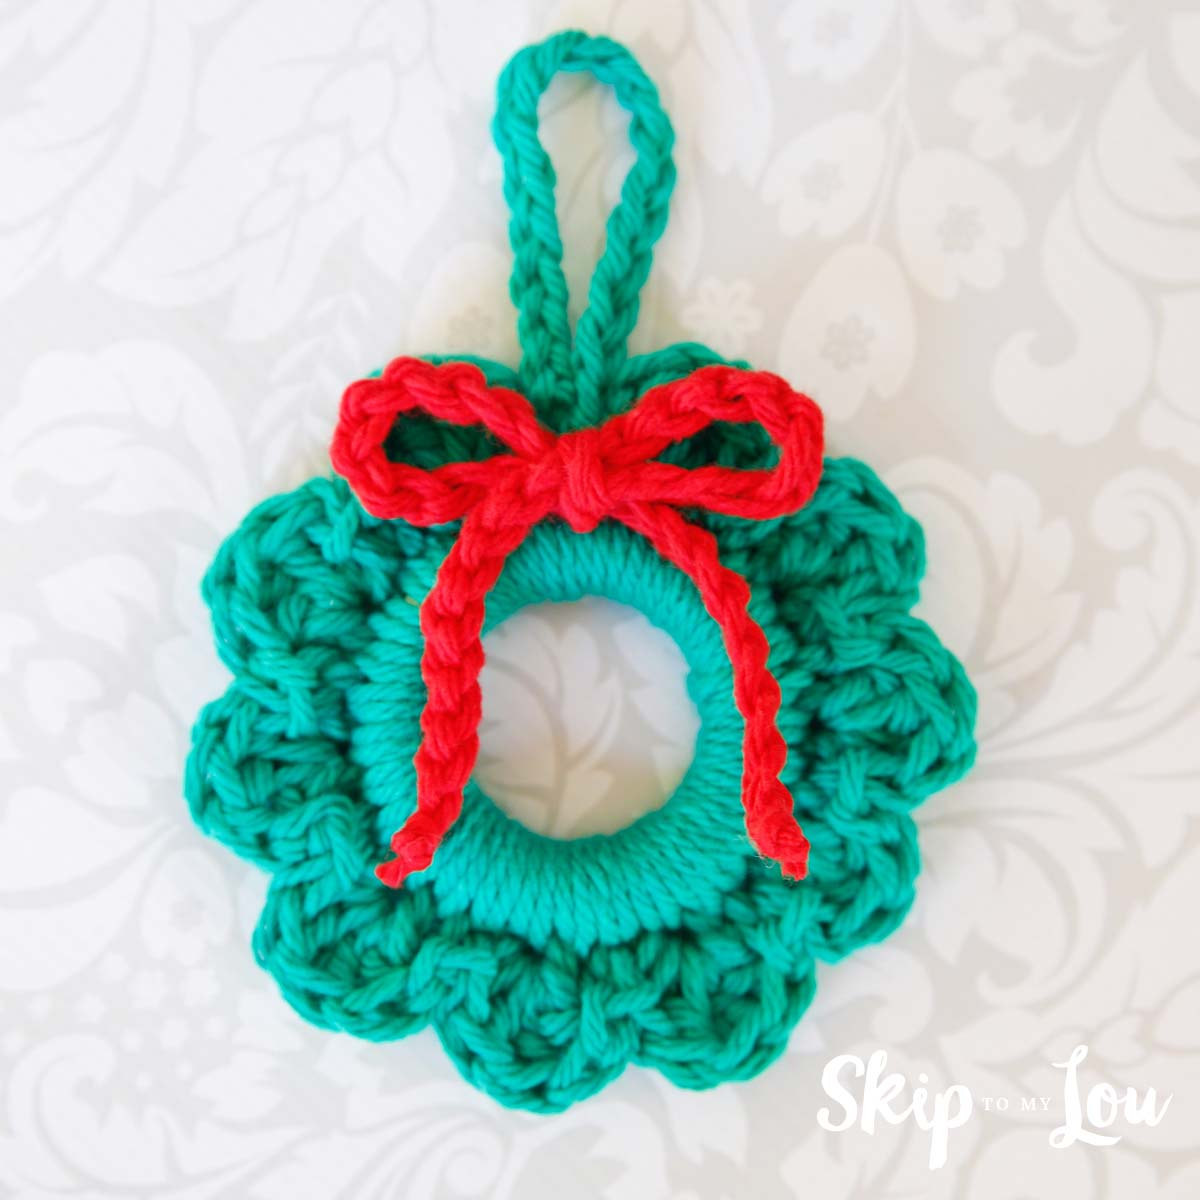 Crochet Christmas Ornament Patterns Easy Crochet Wreath Ornament Skip To My Lou